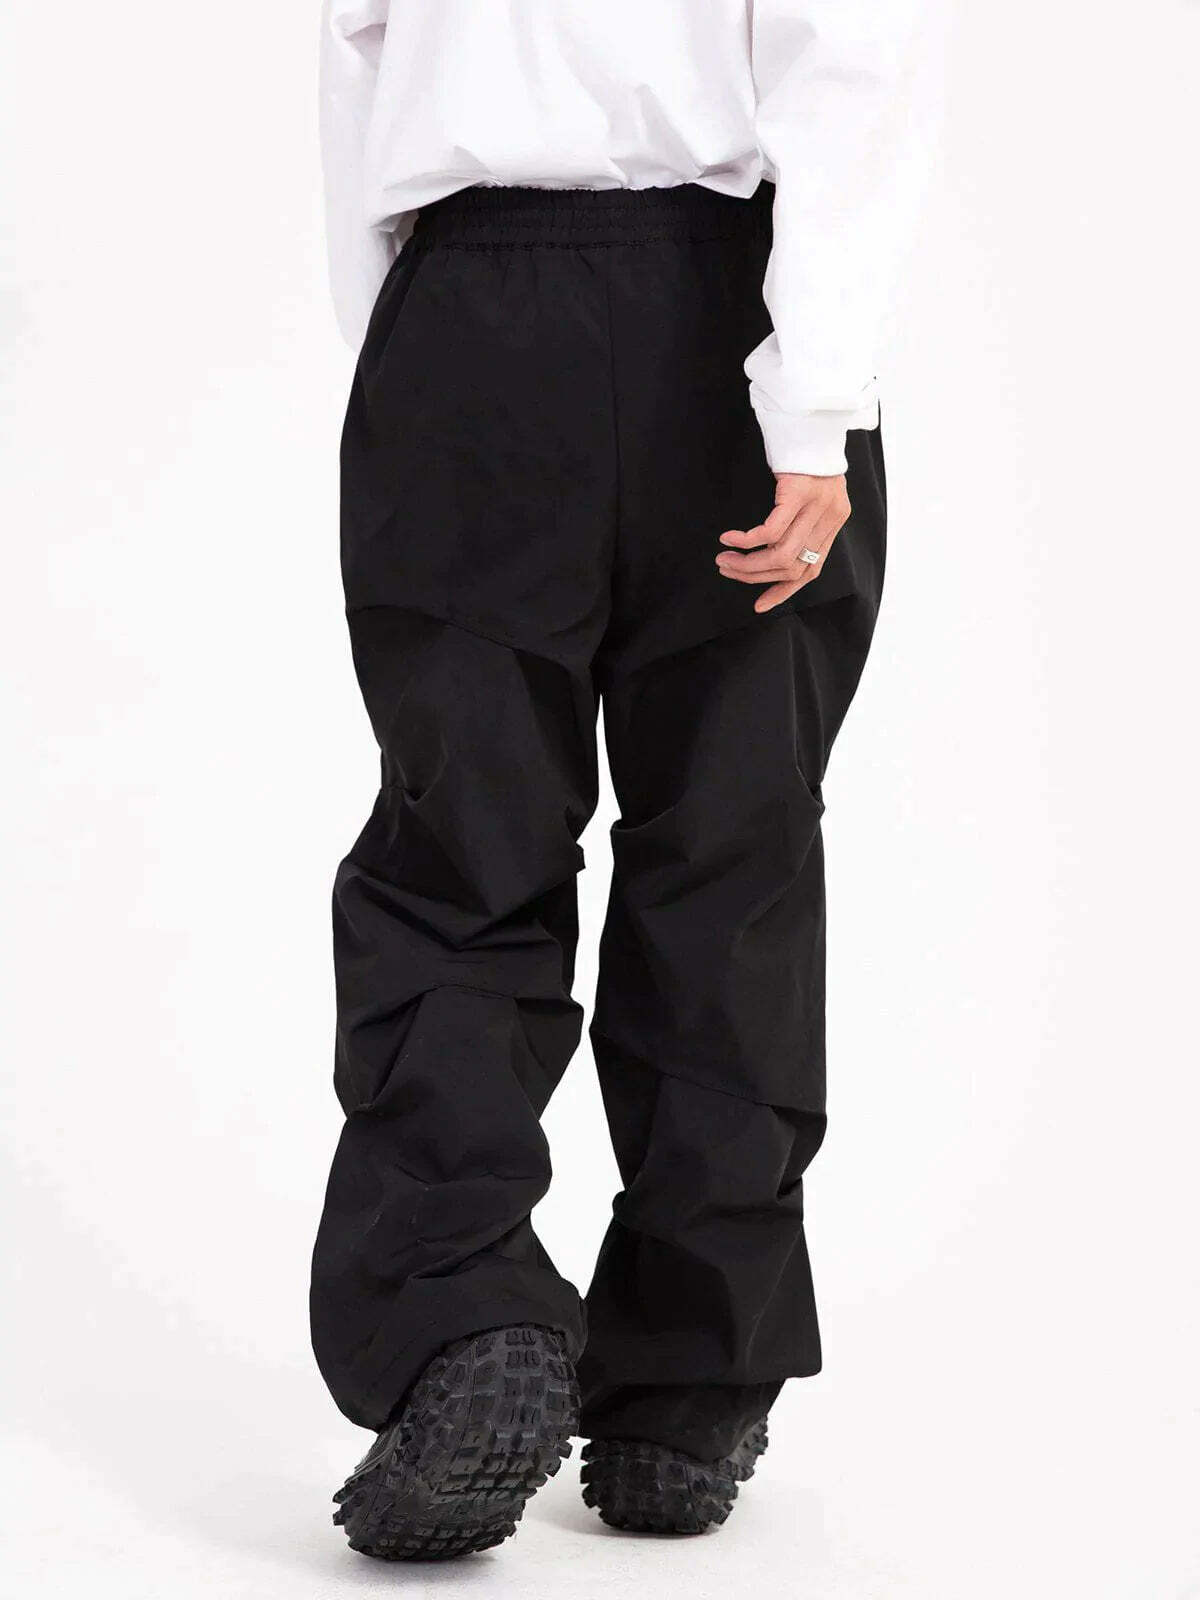 layered pleated pants edgy & versatile streetwear 3692